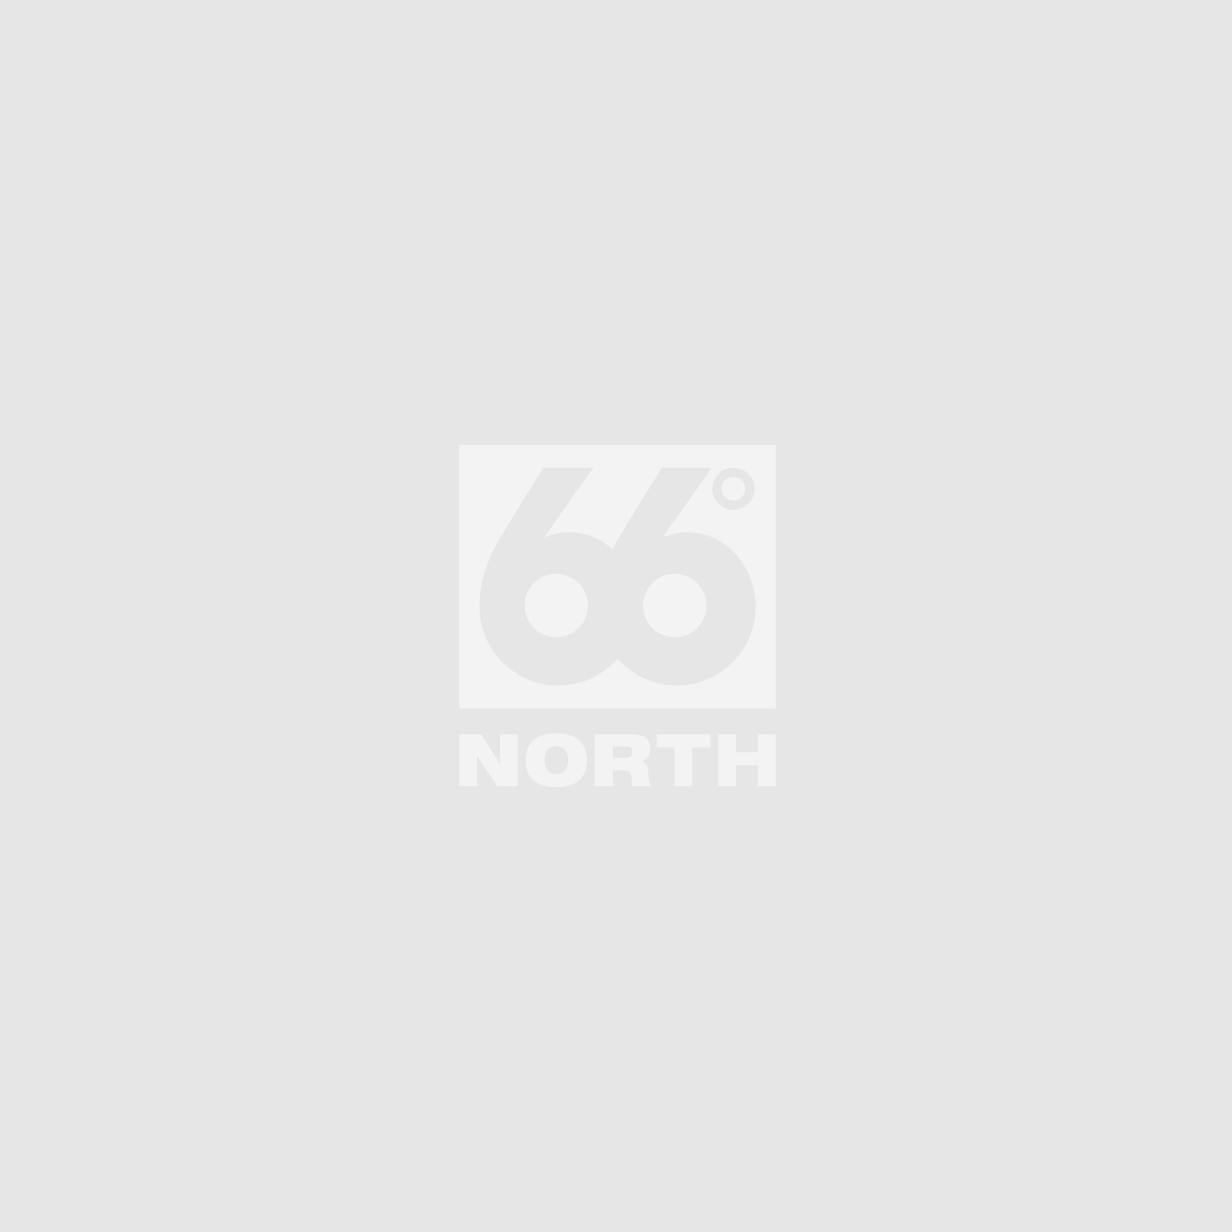 66 North Women's Tindur Tops & Waistcoats